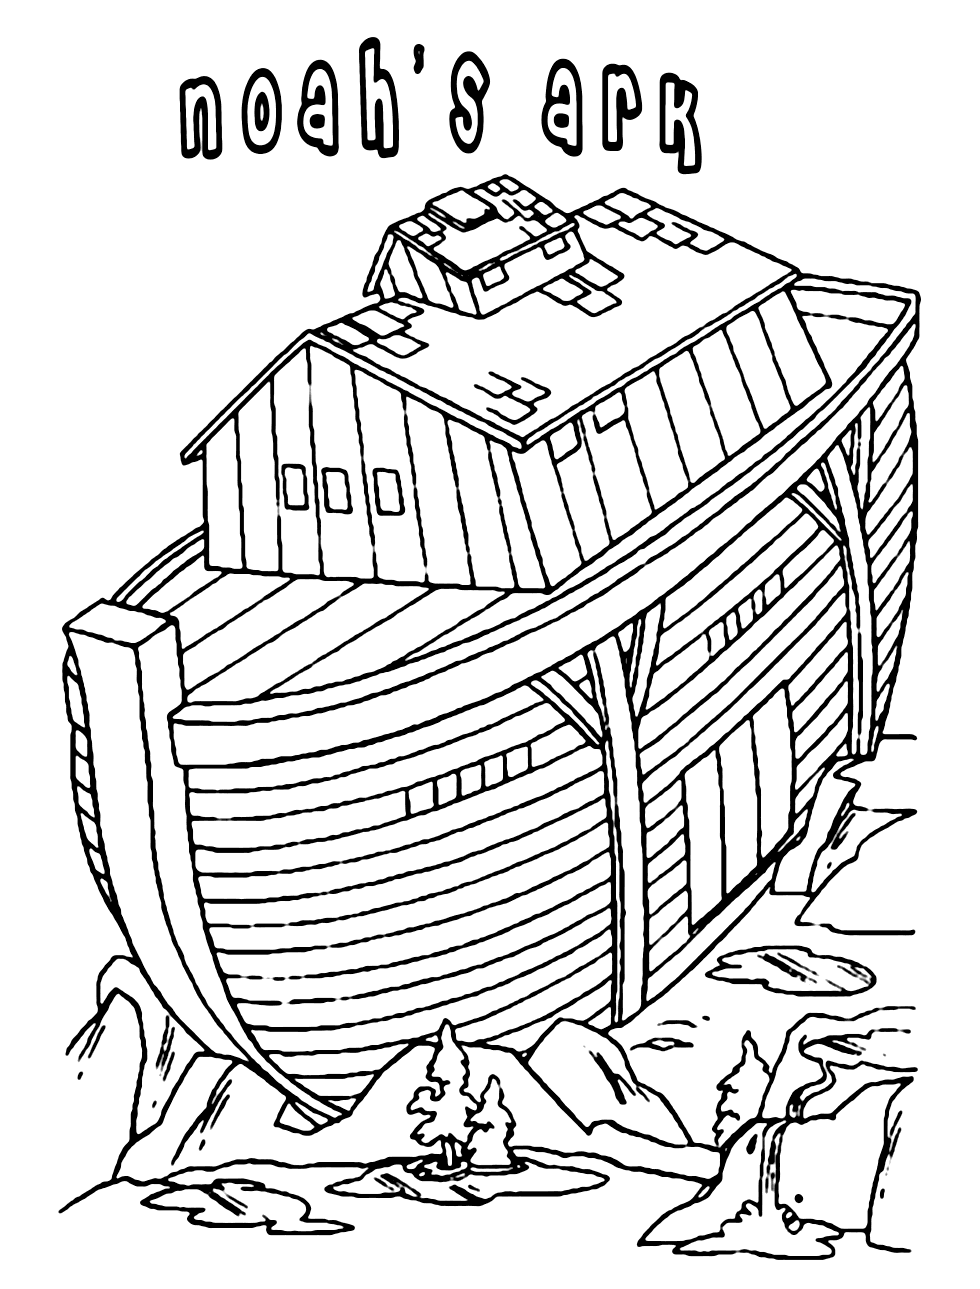 Noahs Ark Coloring Page